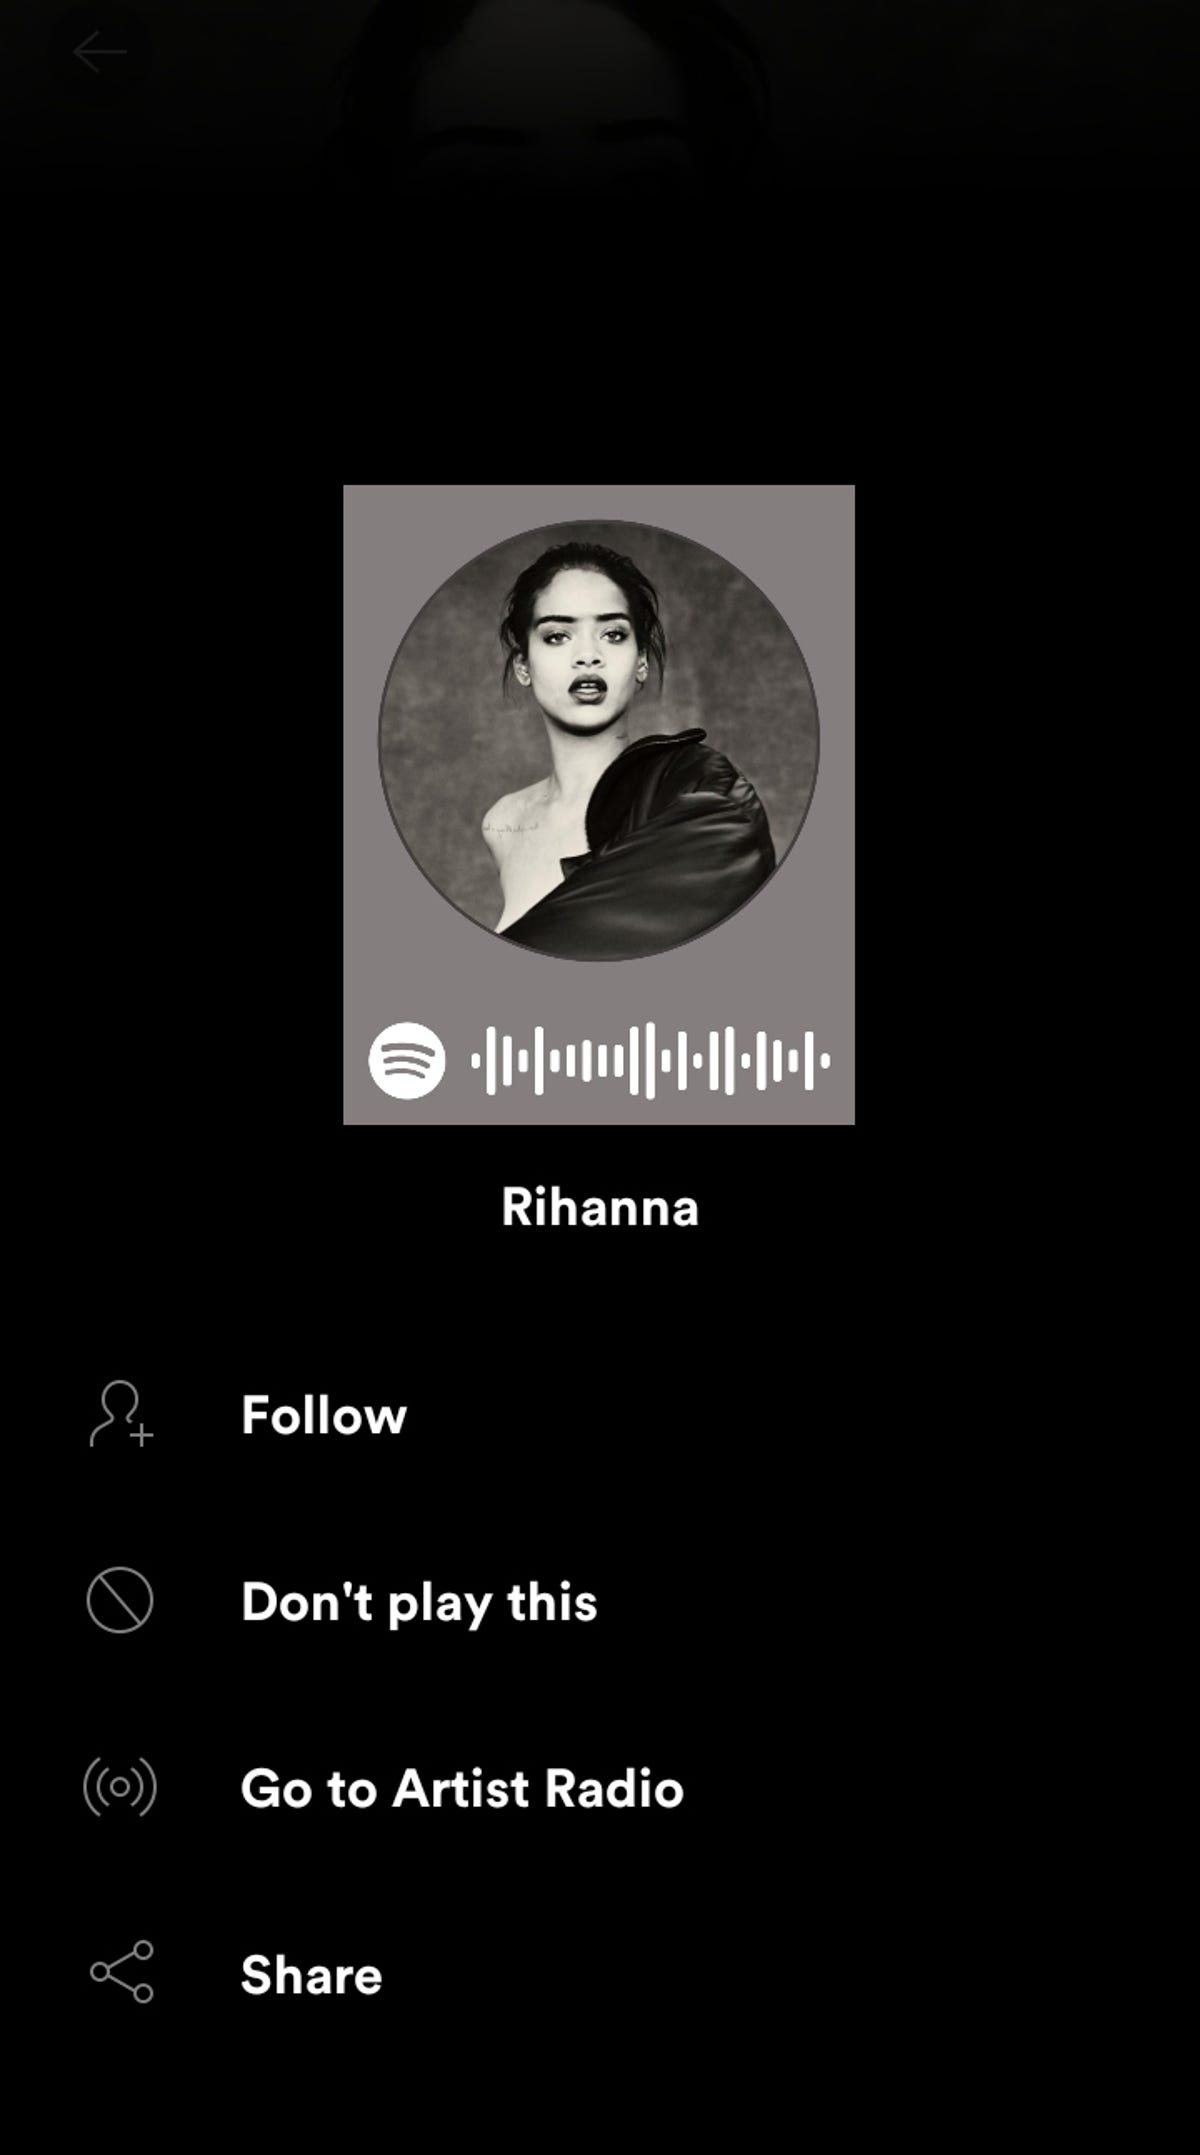 Spotify artist menu page for Rihanna